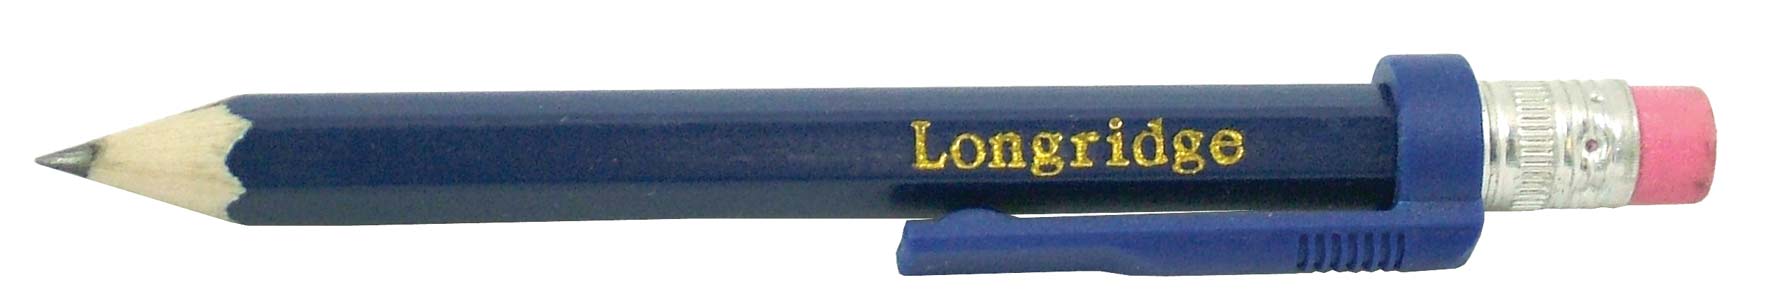 Longridge Golf Pencil With Eraser and Clip 5pk